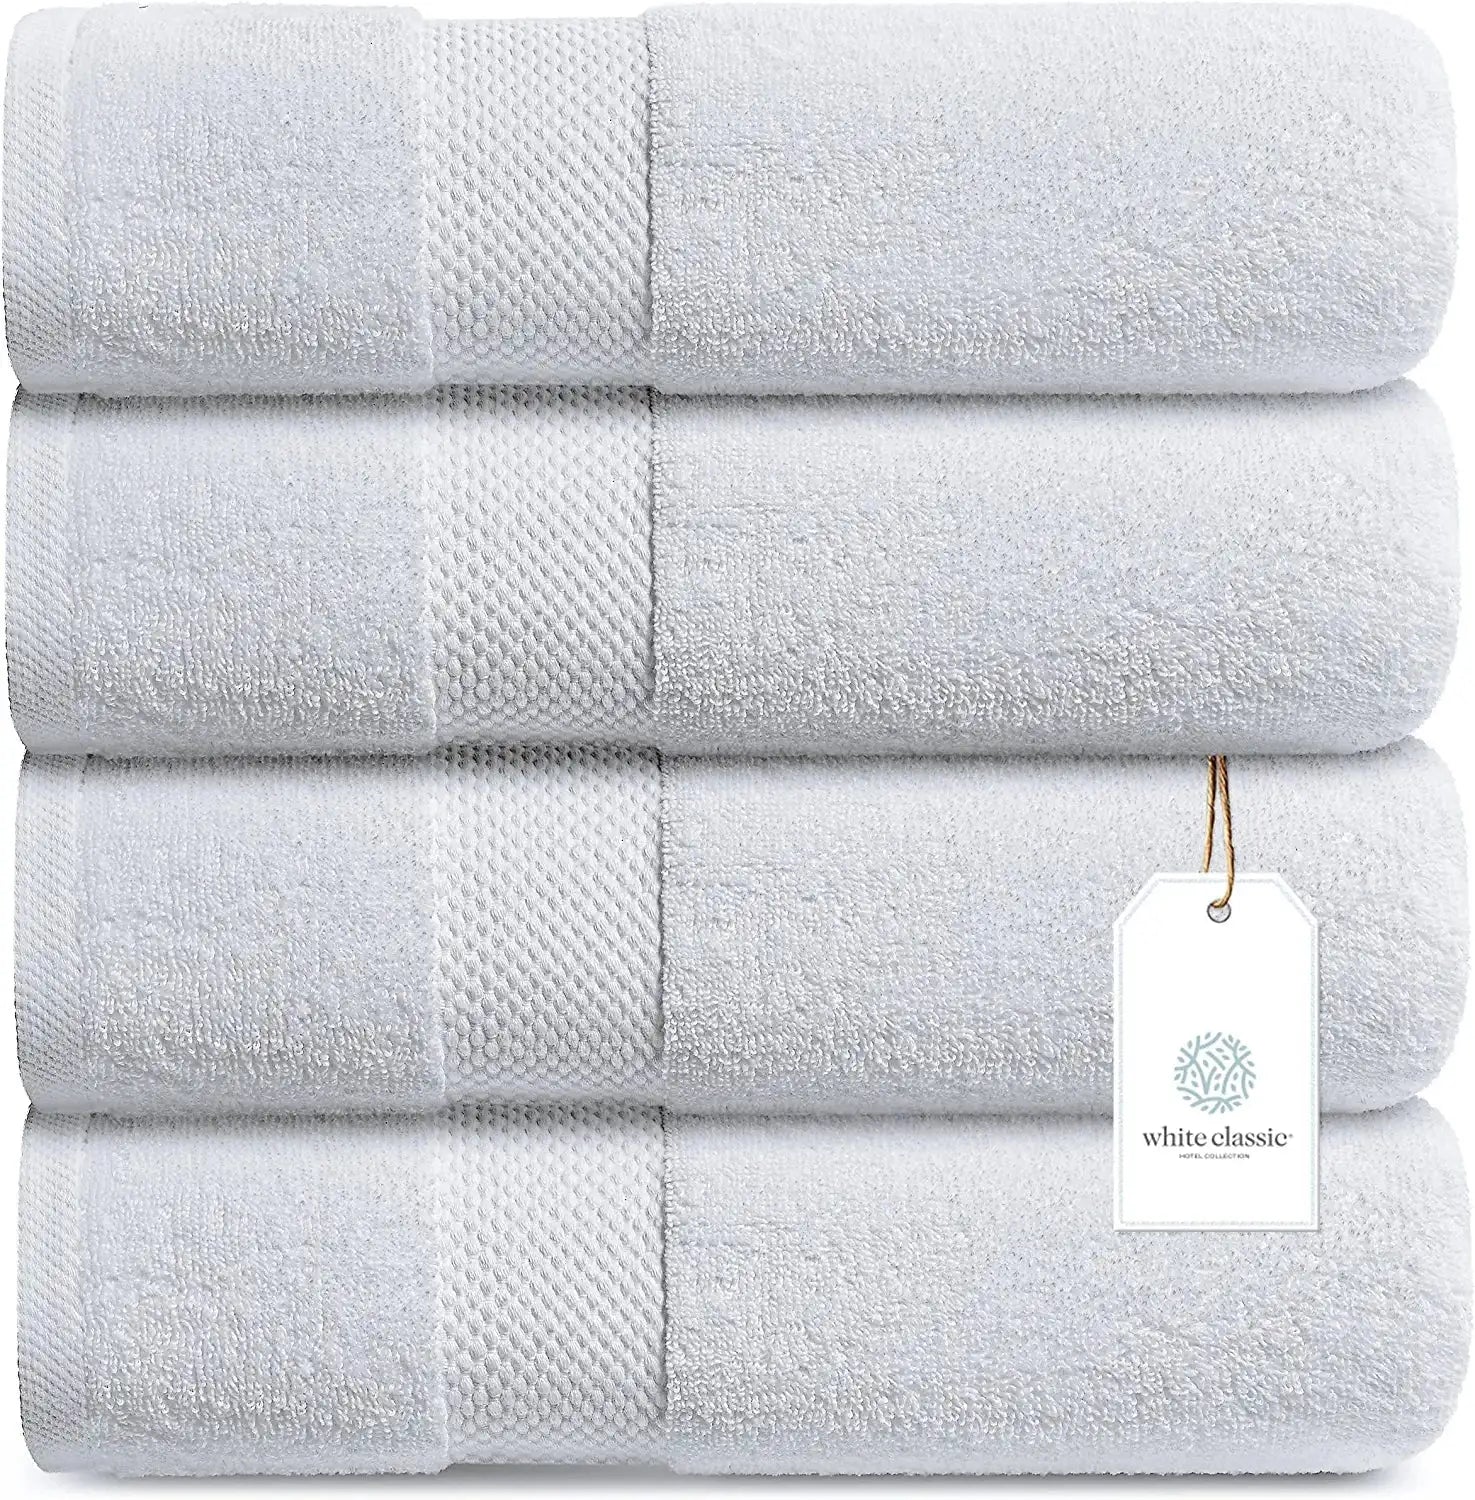 Premium Hotel Bath Towels, White 22x44